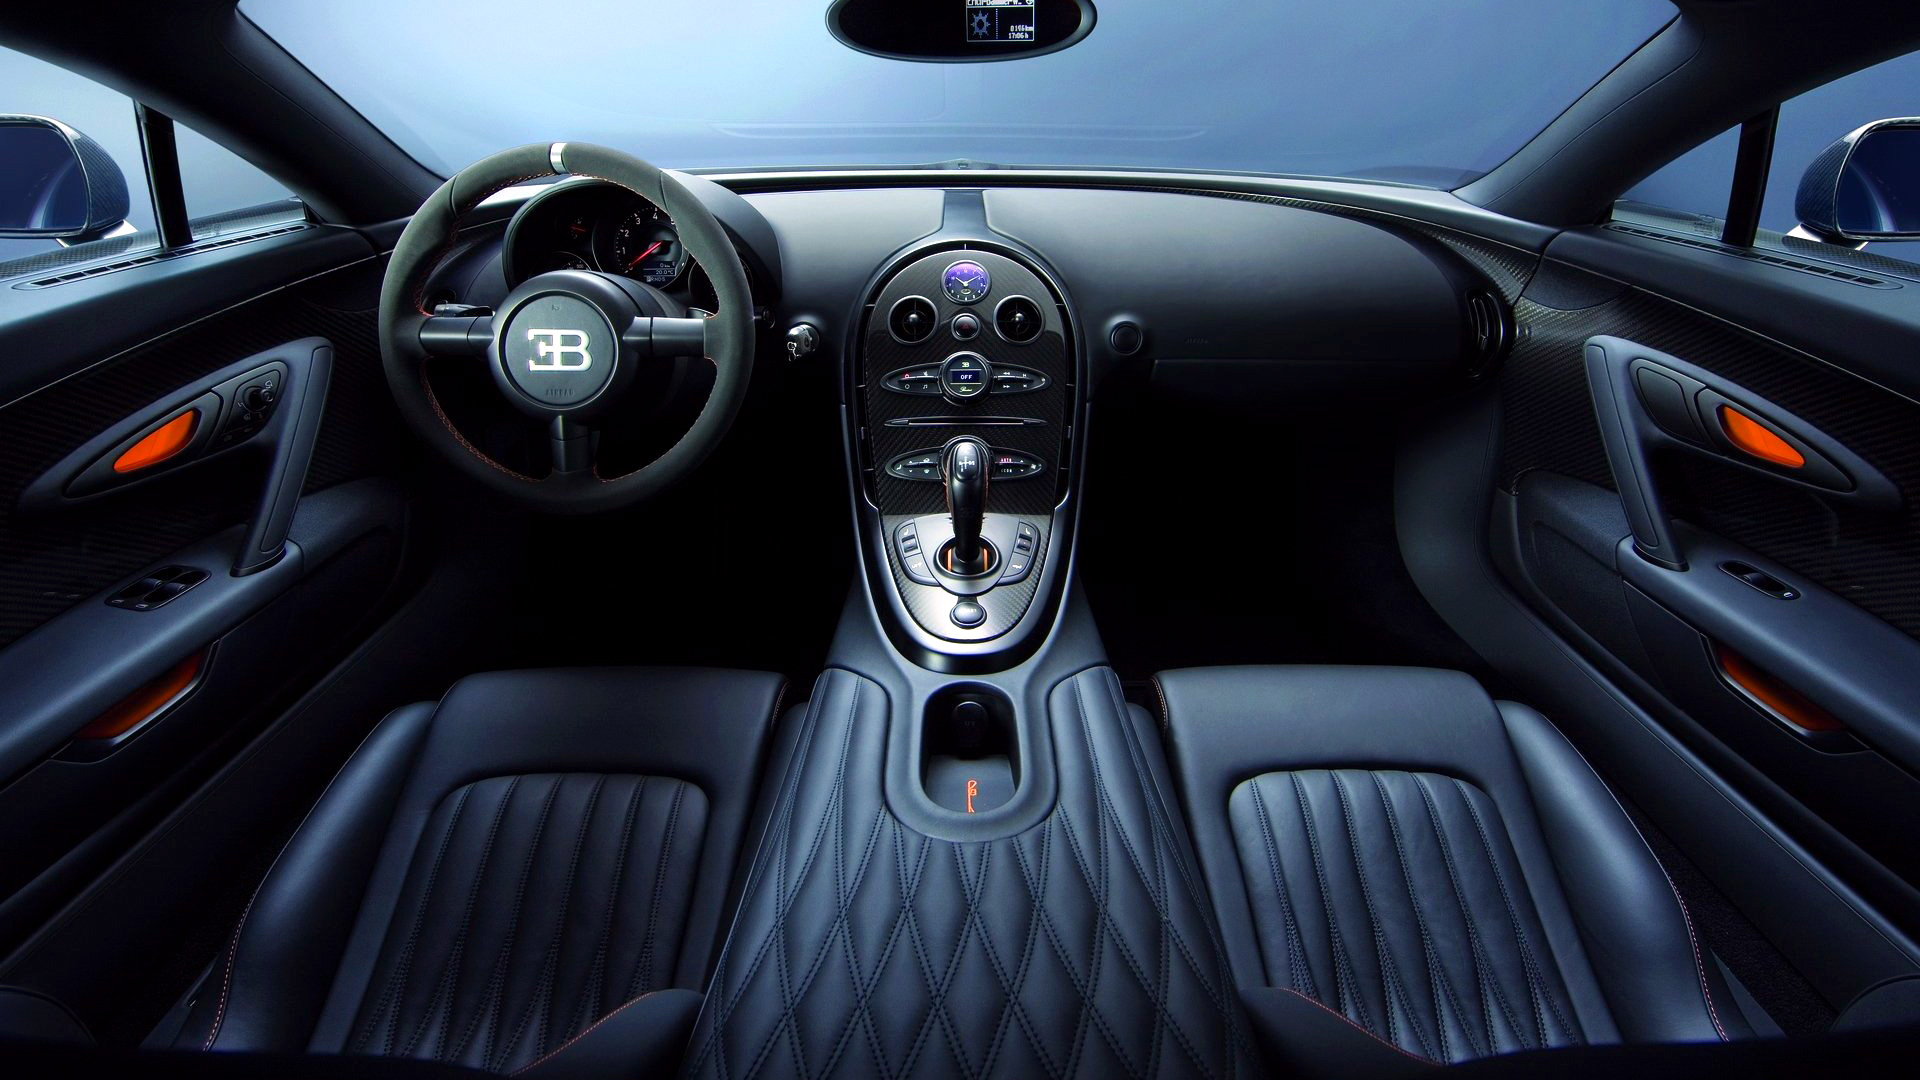  2009 Bugatti Veyron 16-4 Grand Sport Wallpaper.